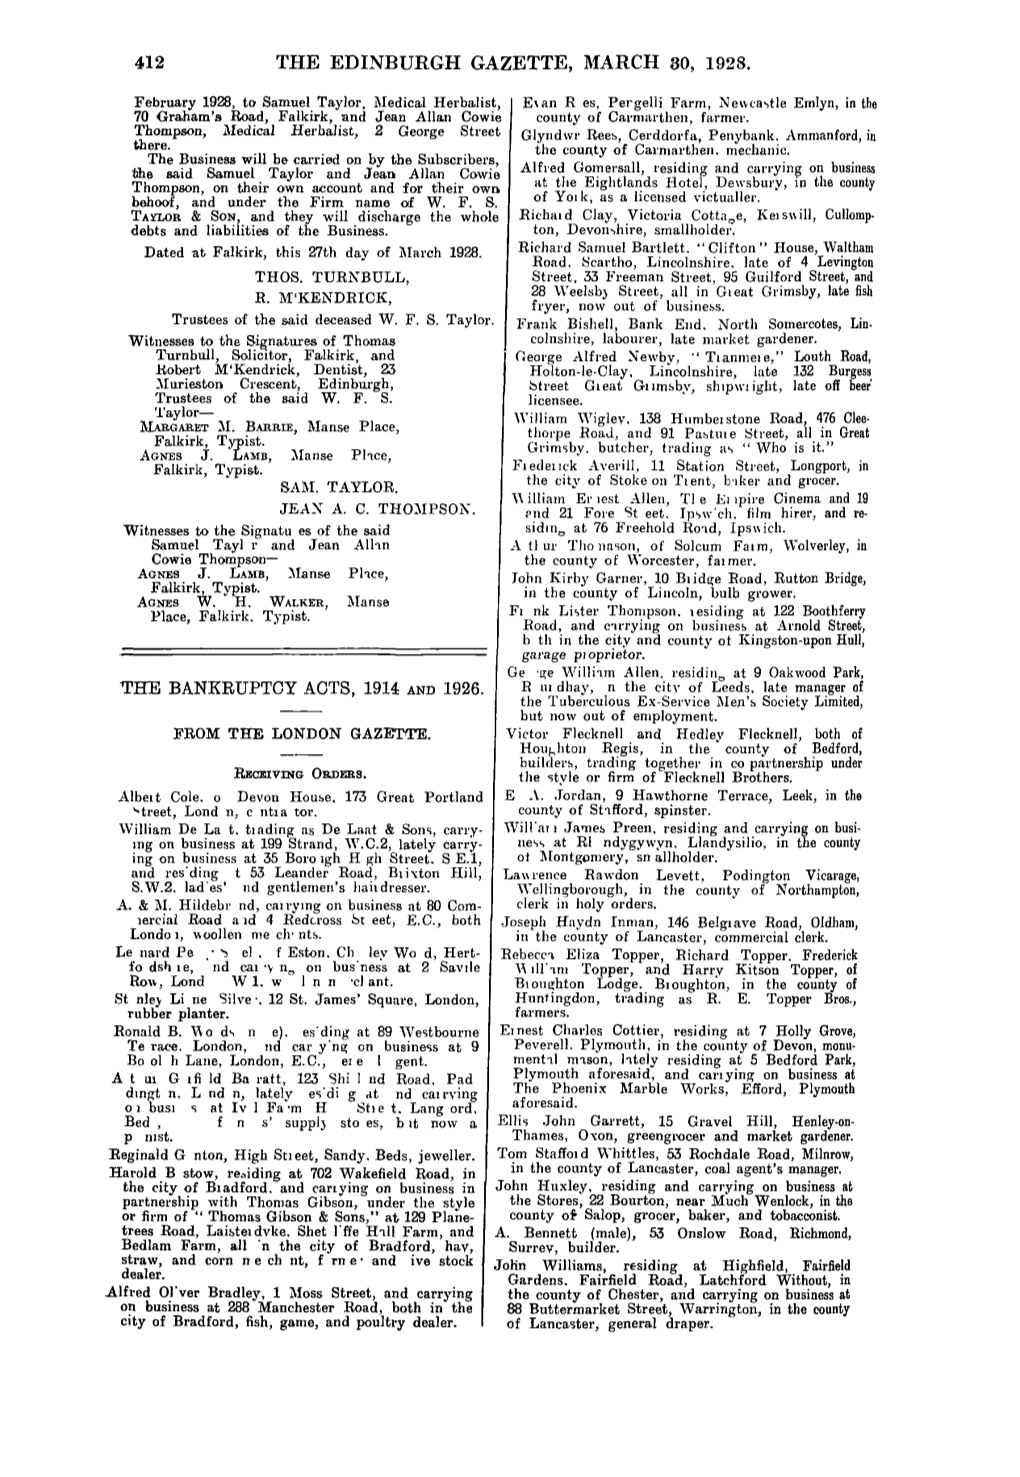 The Edinburgh Gazette, March 30, 1928